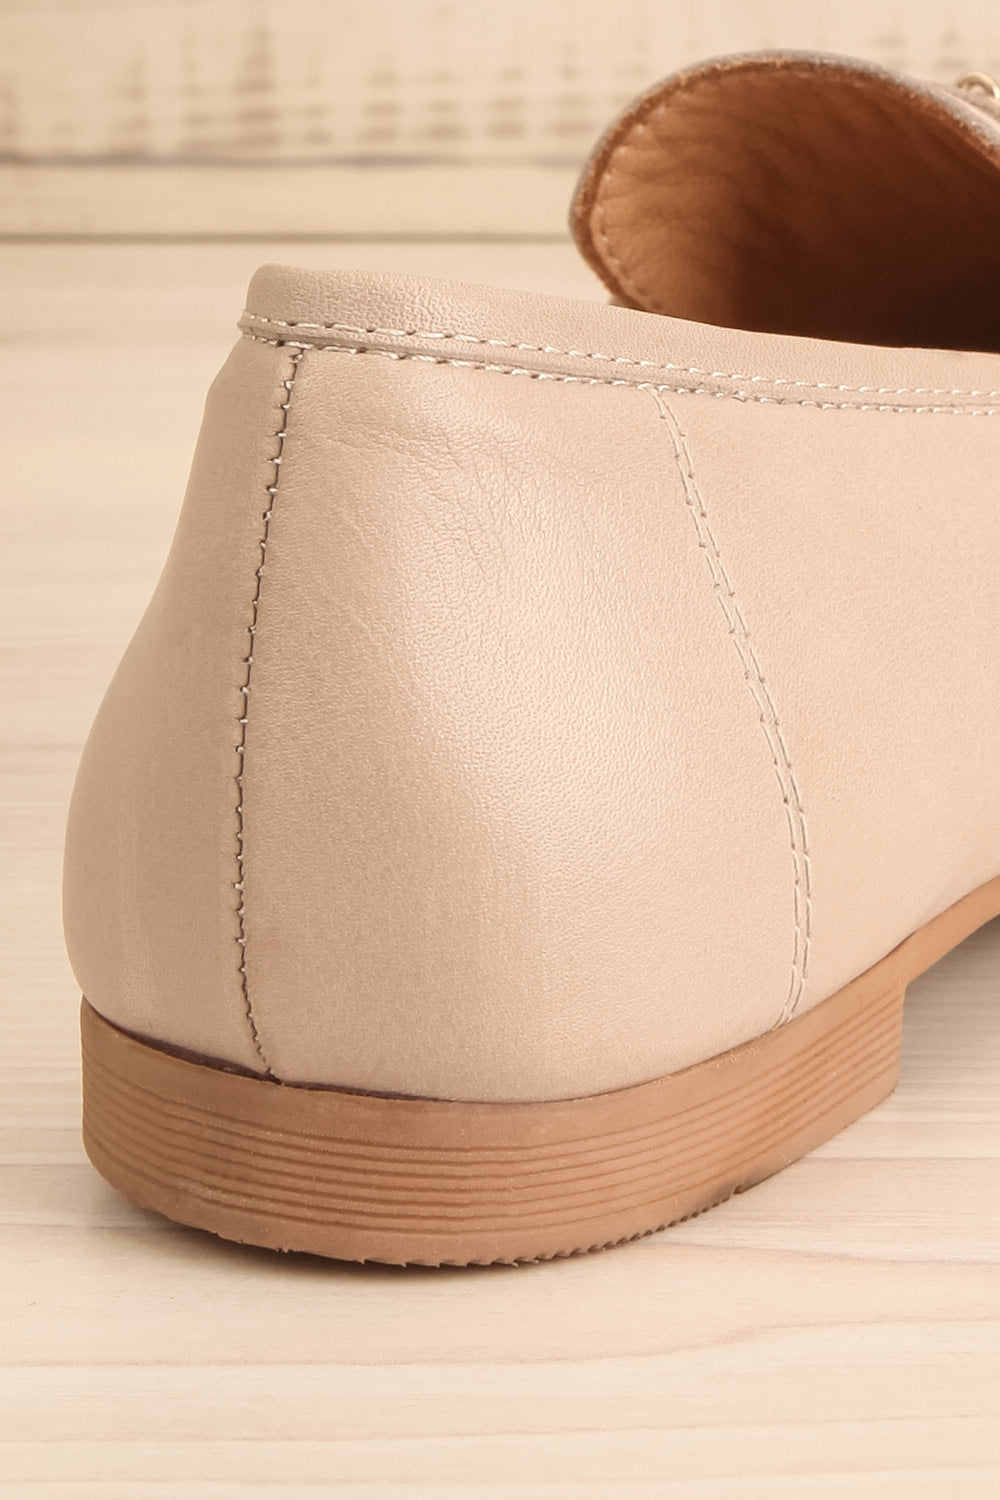 Fernn Taupe Leather Loafers | La petite garçonne back close-up